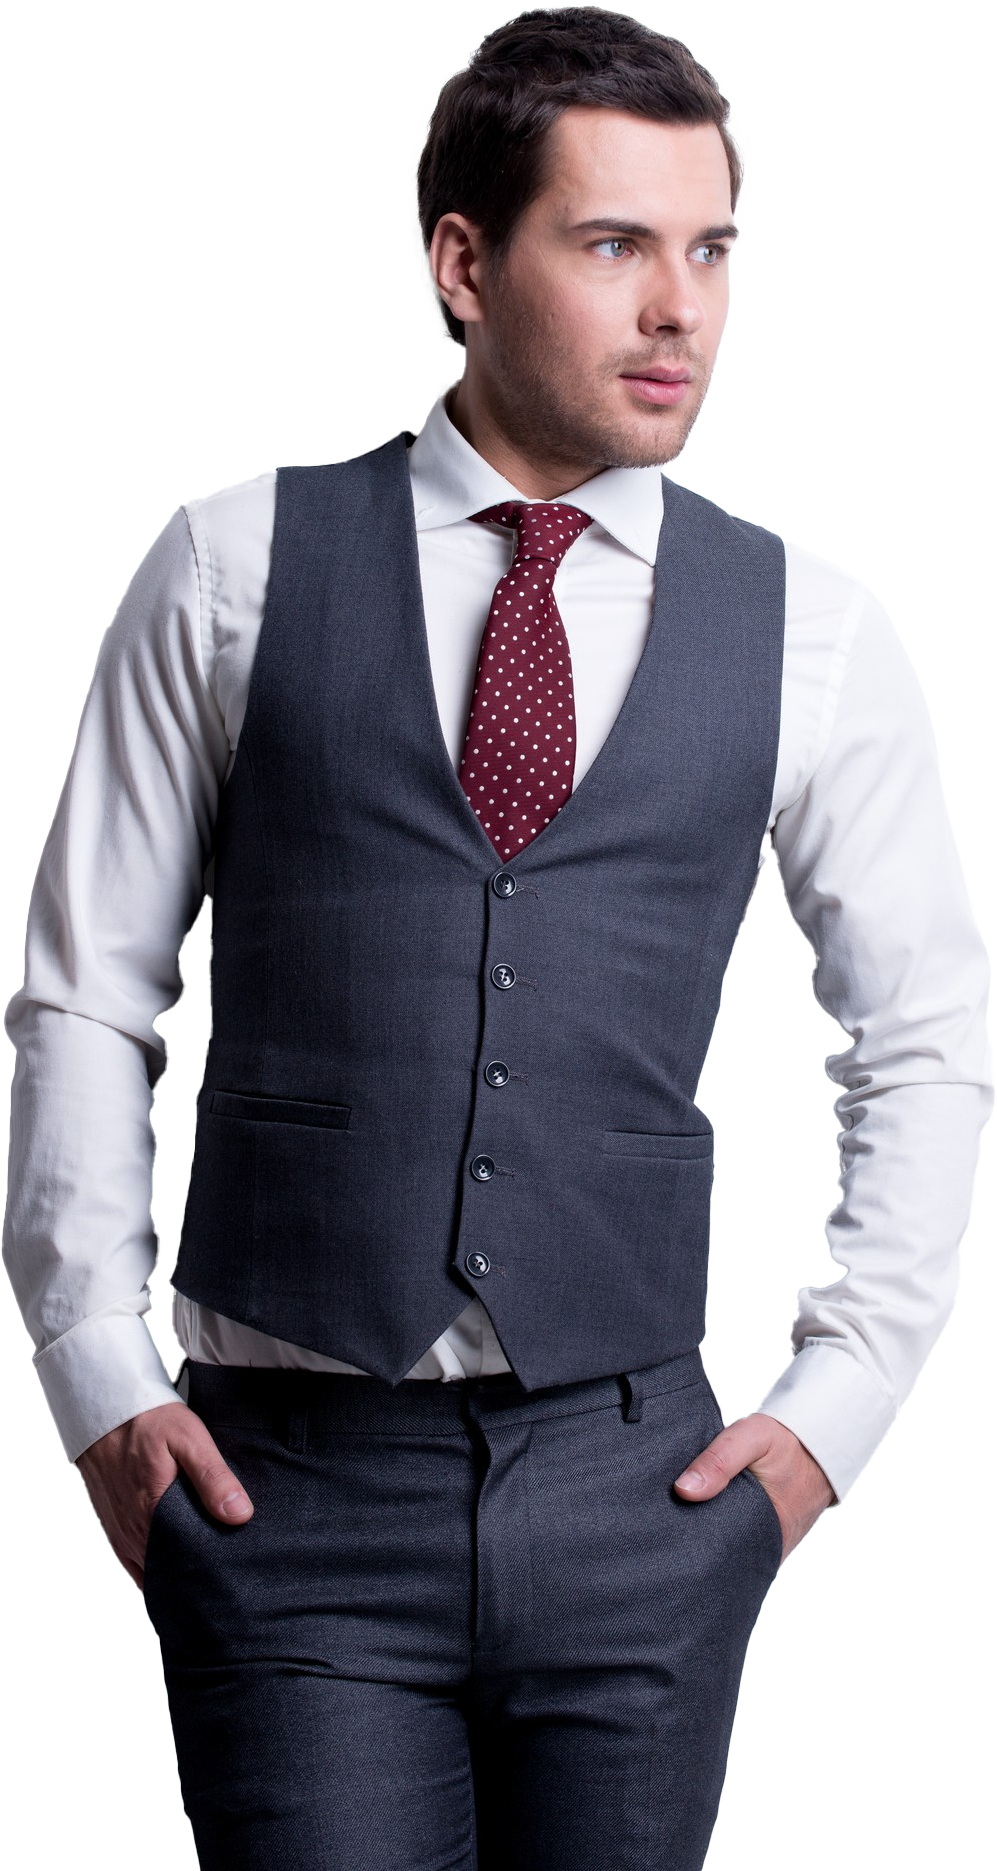 Handsome Business Man in Suit Transparent Image - Veepic